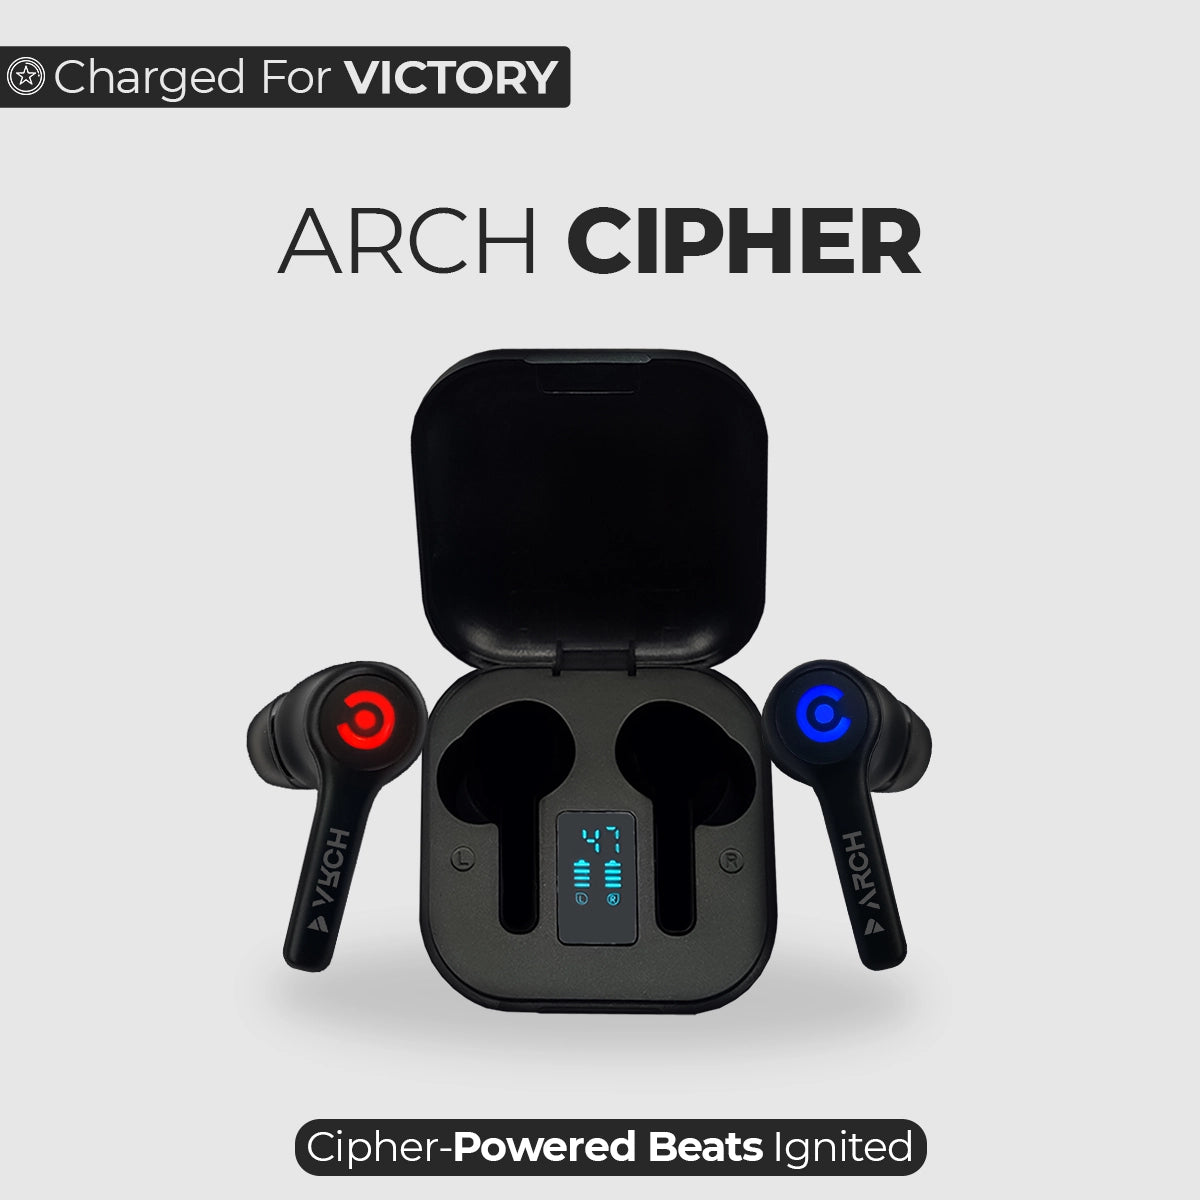 ARCH Cipher